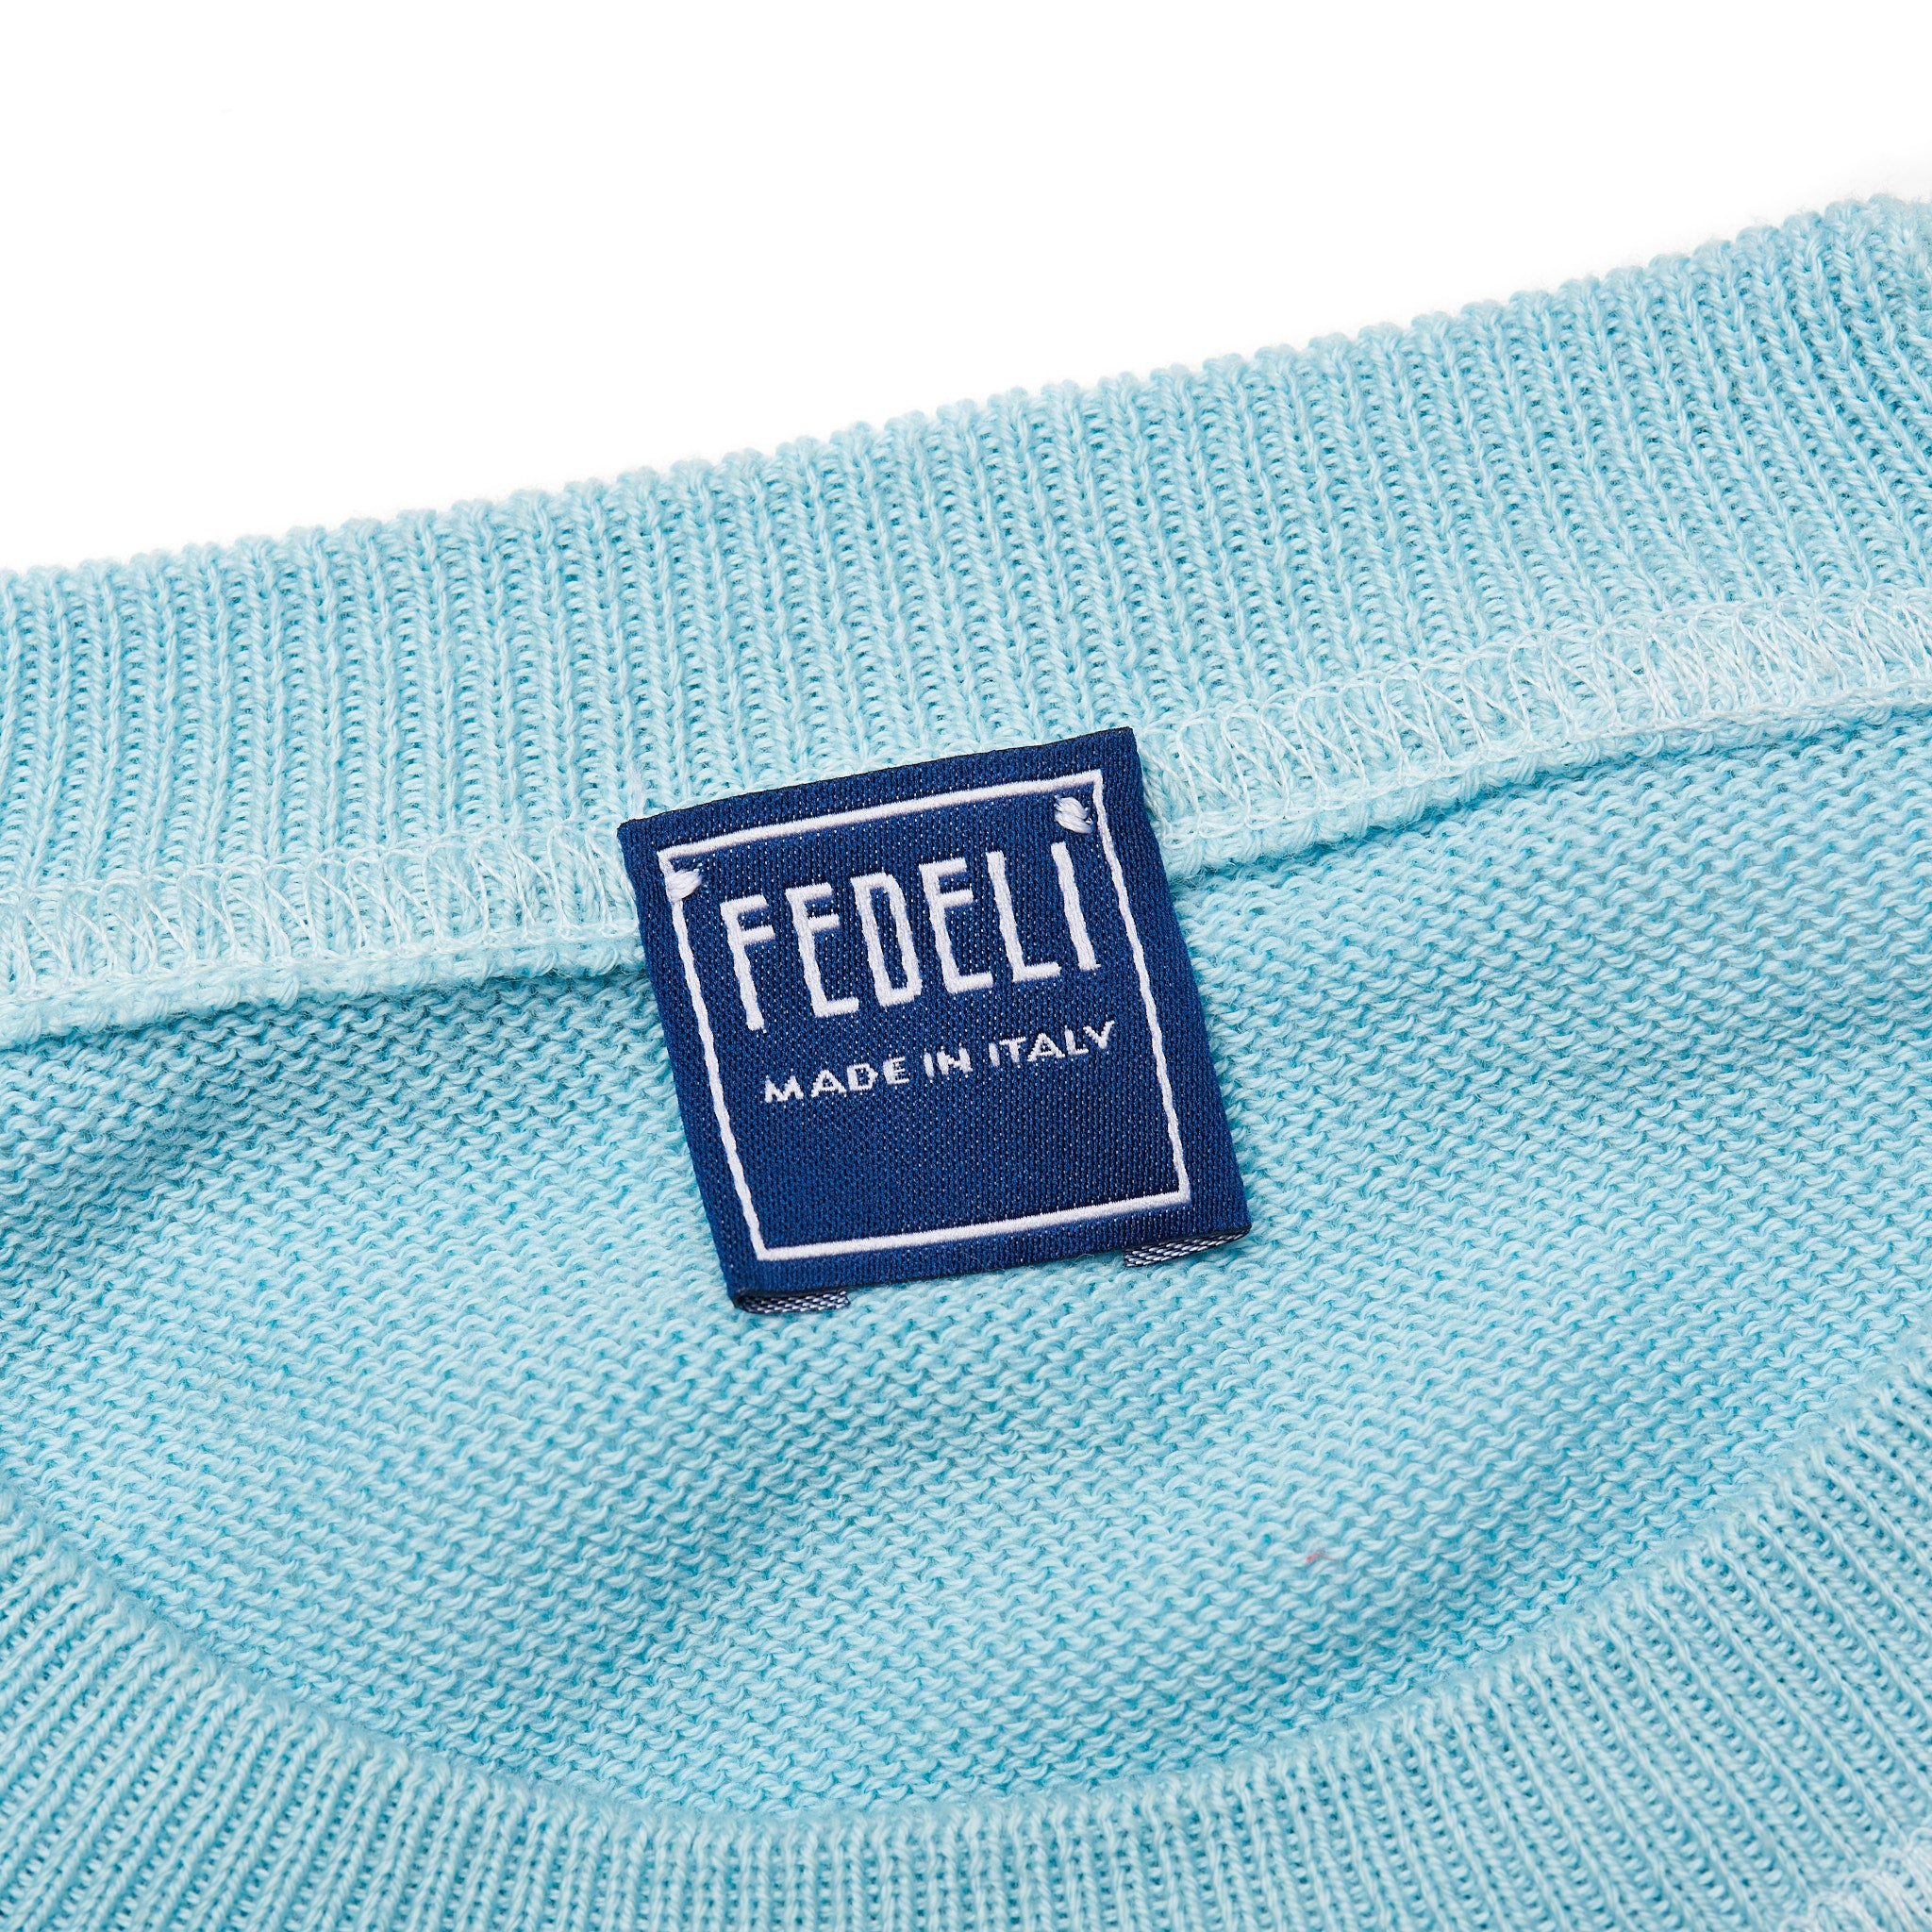 FEDELI "Tiger" Light Turquoise Supima Cotton Raglan Crewneck Sweater 50 NEW US M FEDELI